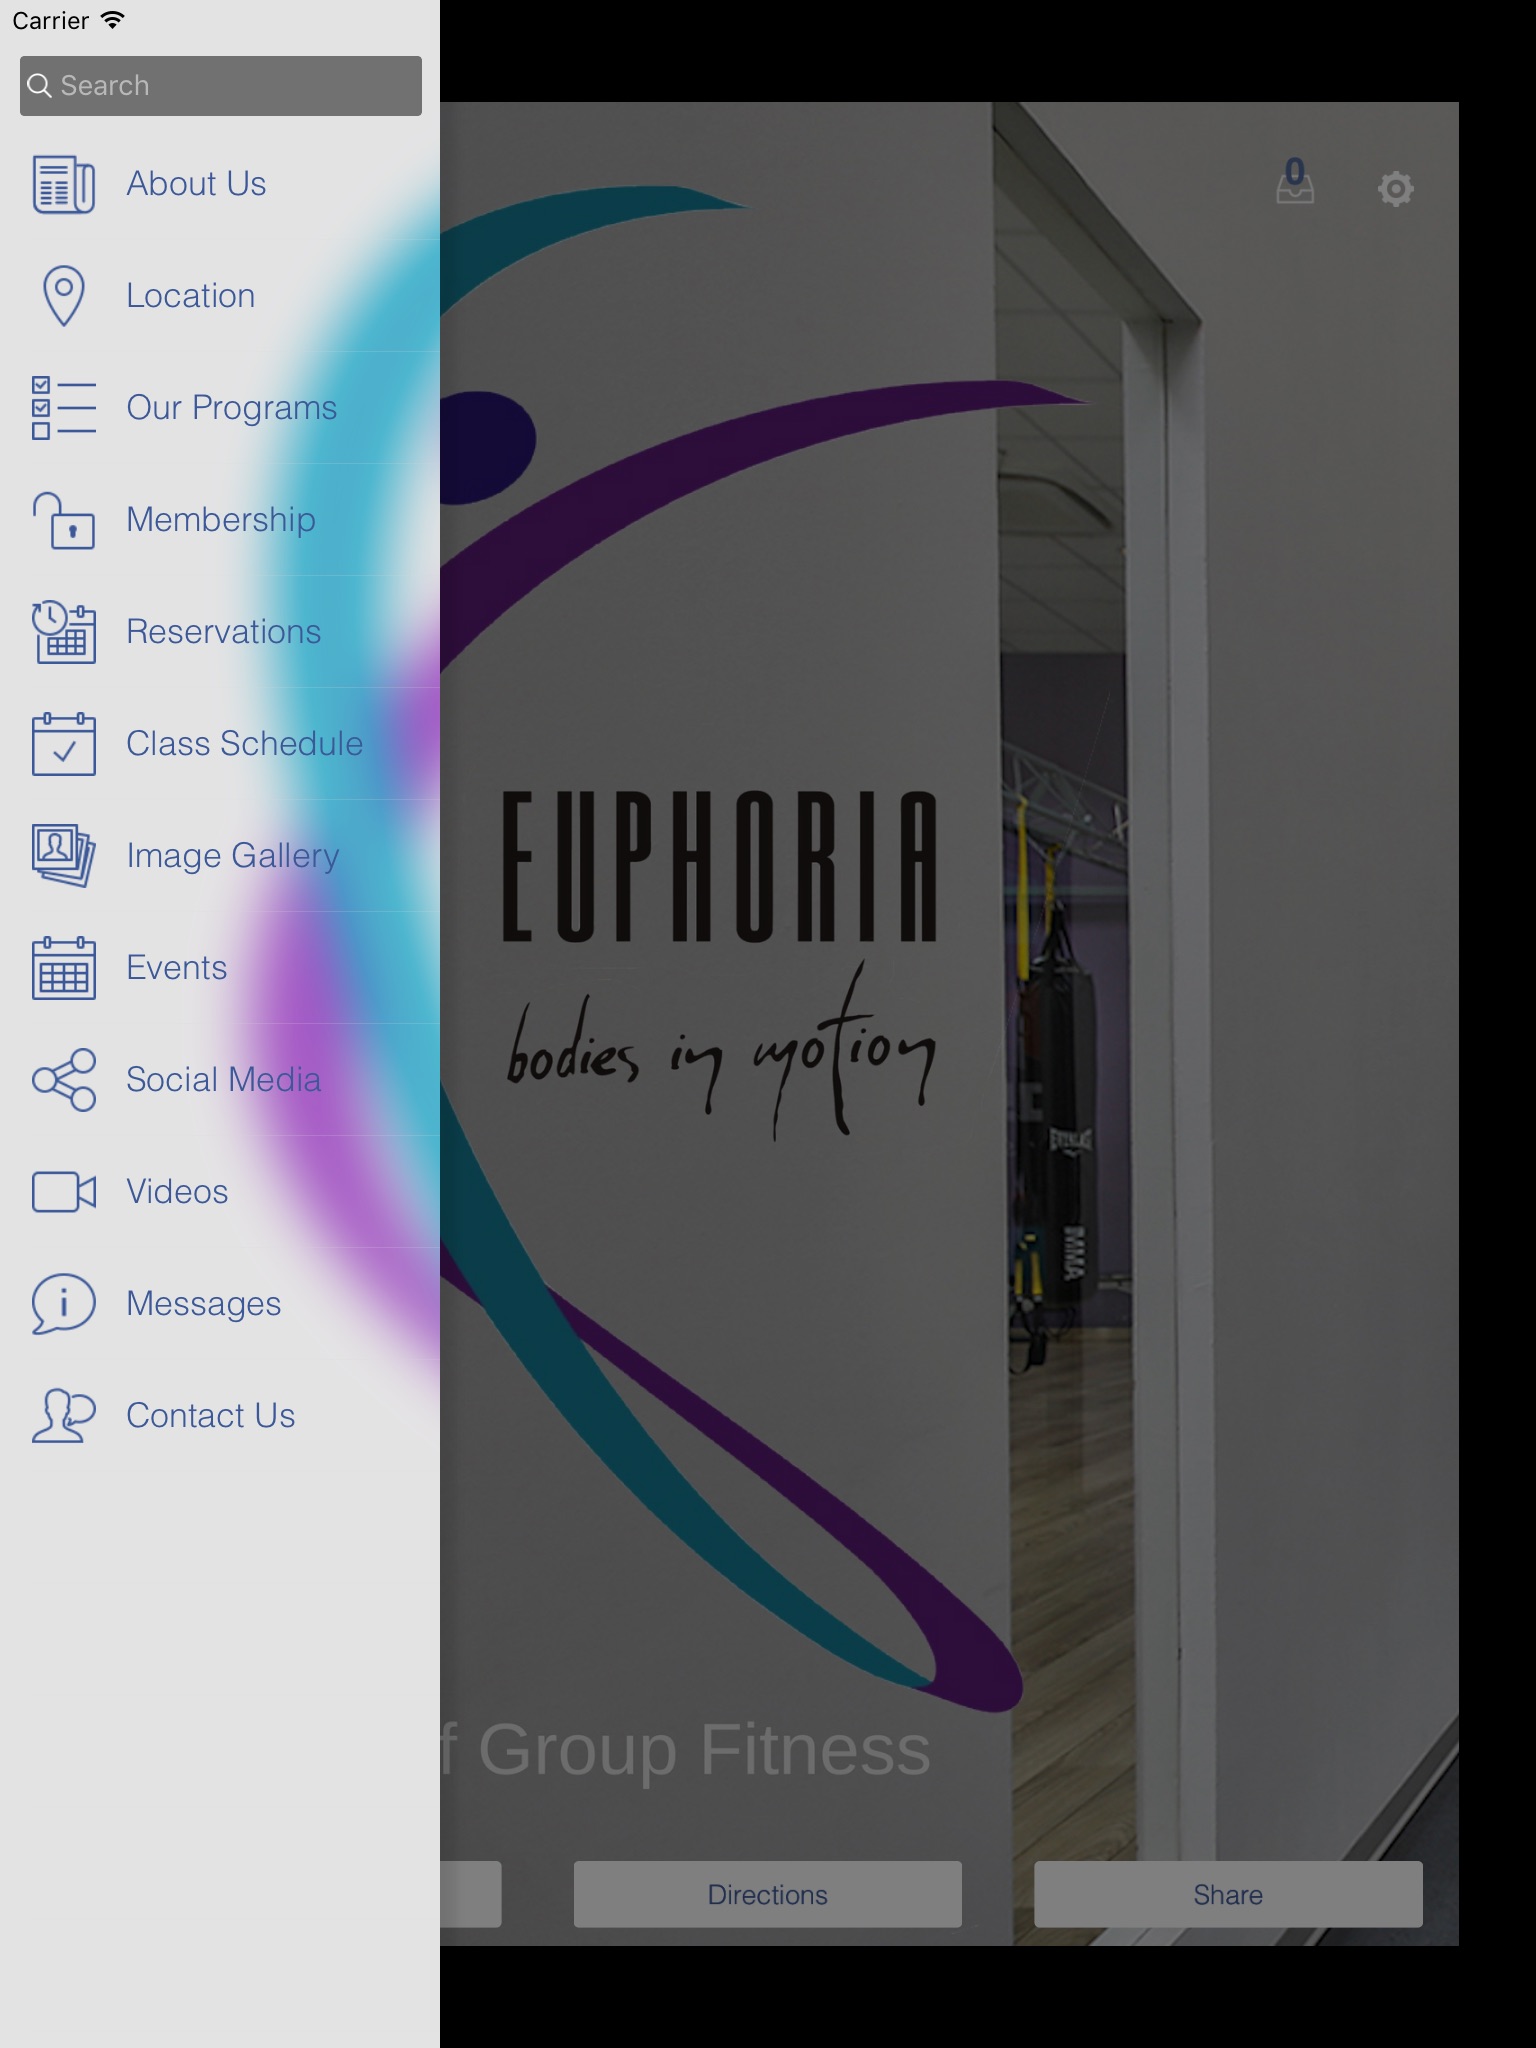 Euphoria Bodies in Motion screenshot 2